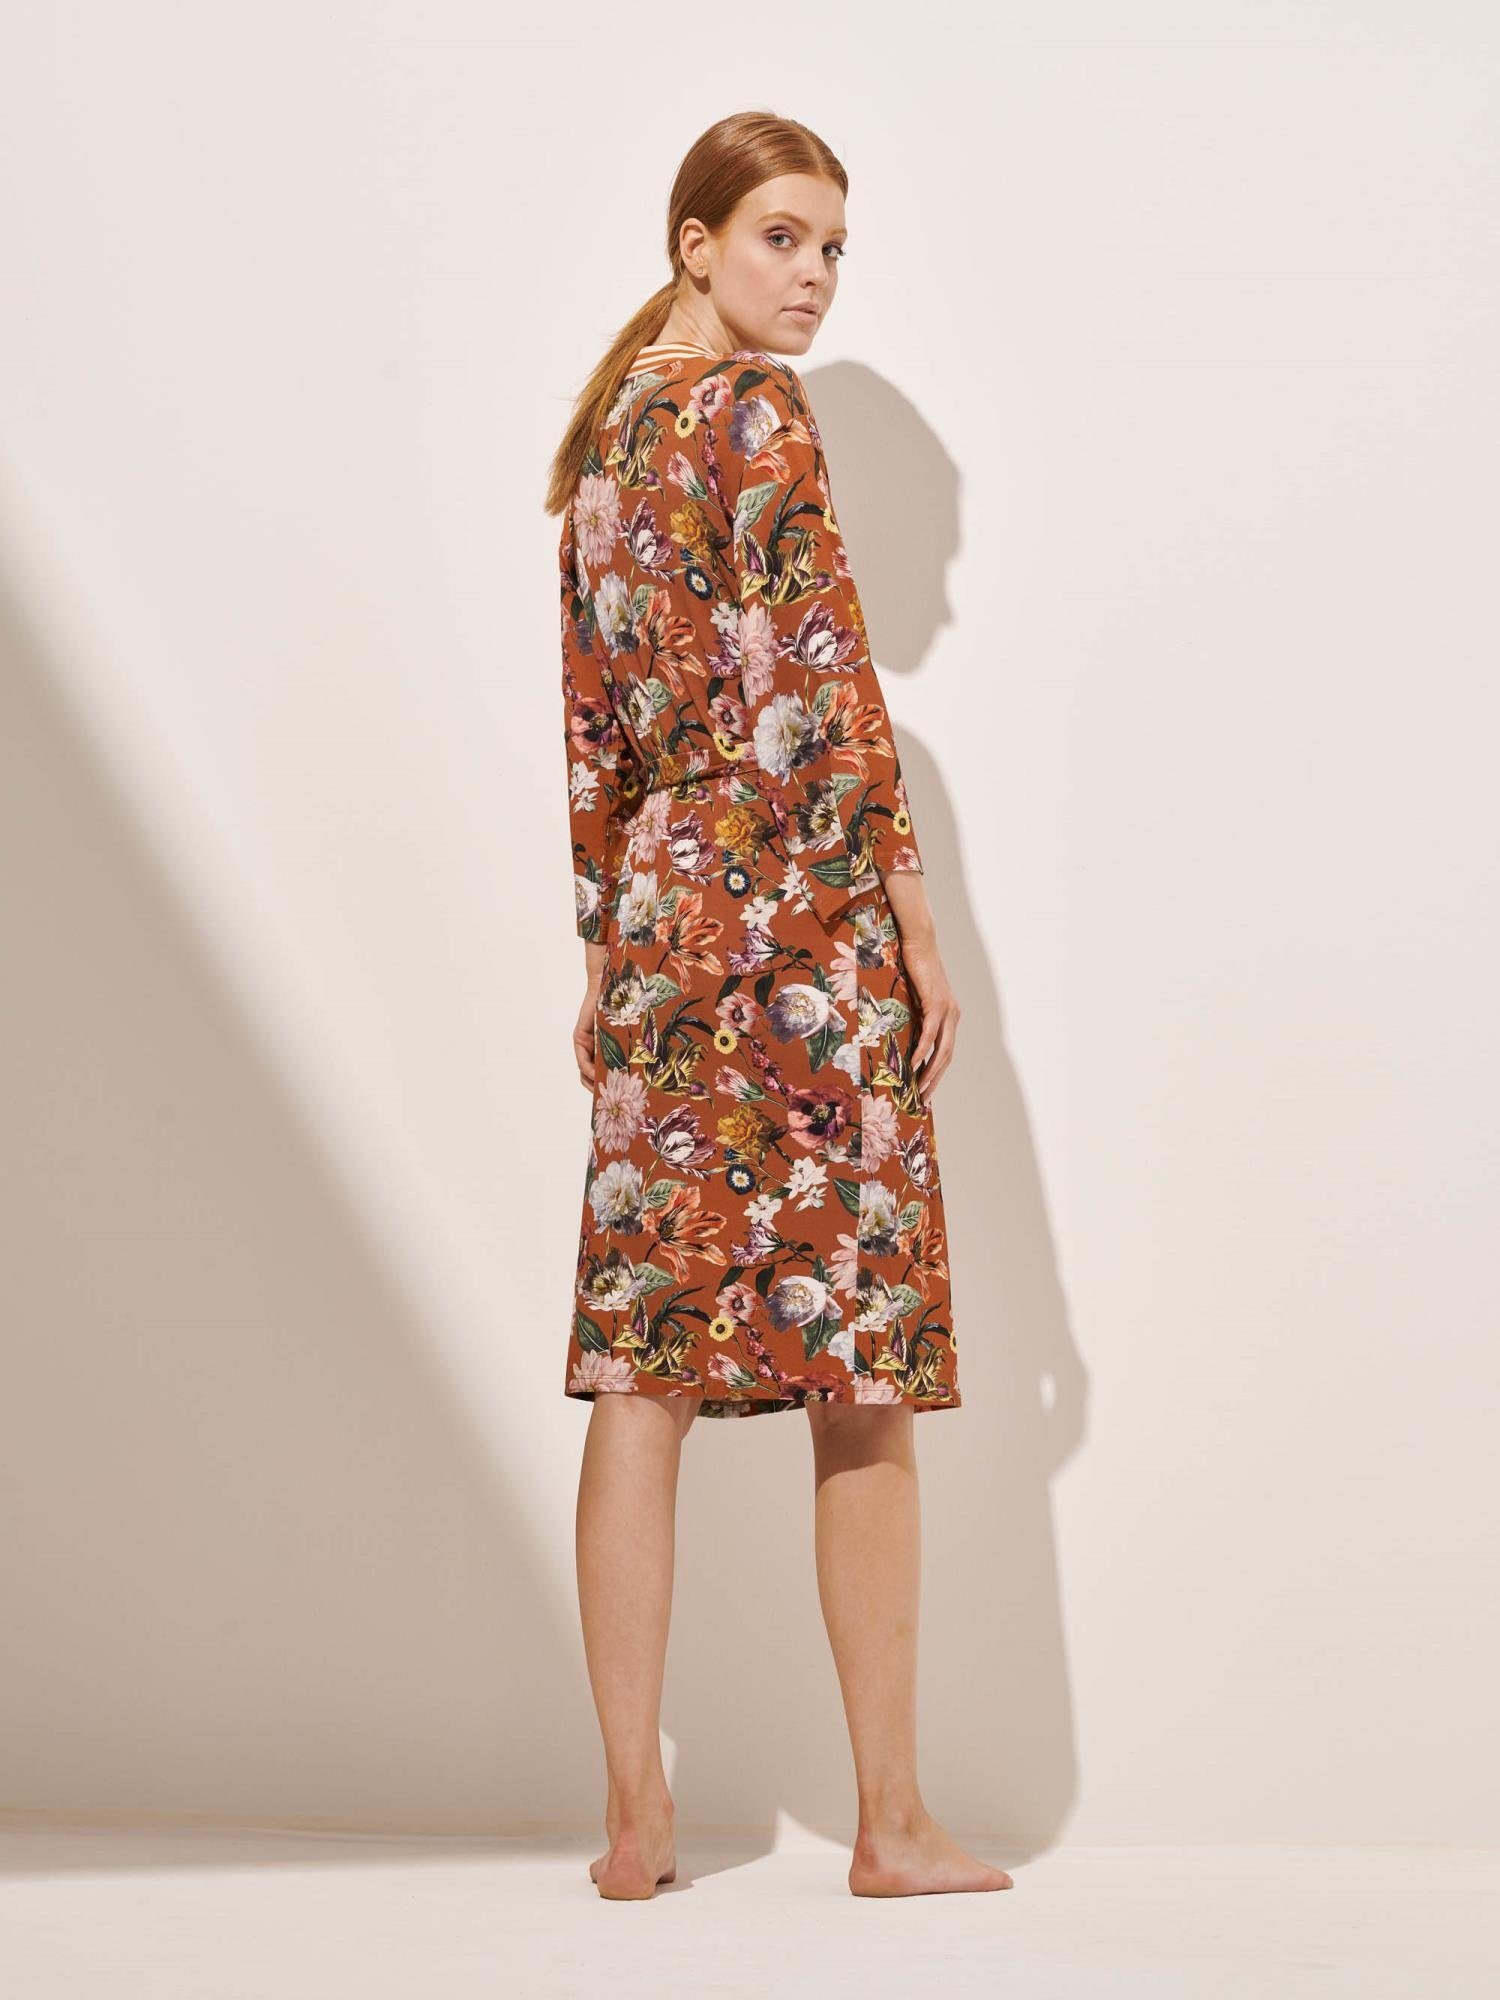 Essenza Kimono Sarai Filou, Gürtel, mit wunderschönem Brown Blumenprint Kurzform, Viskose, Kimono-Kragen, Leather